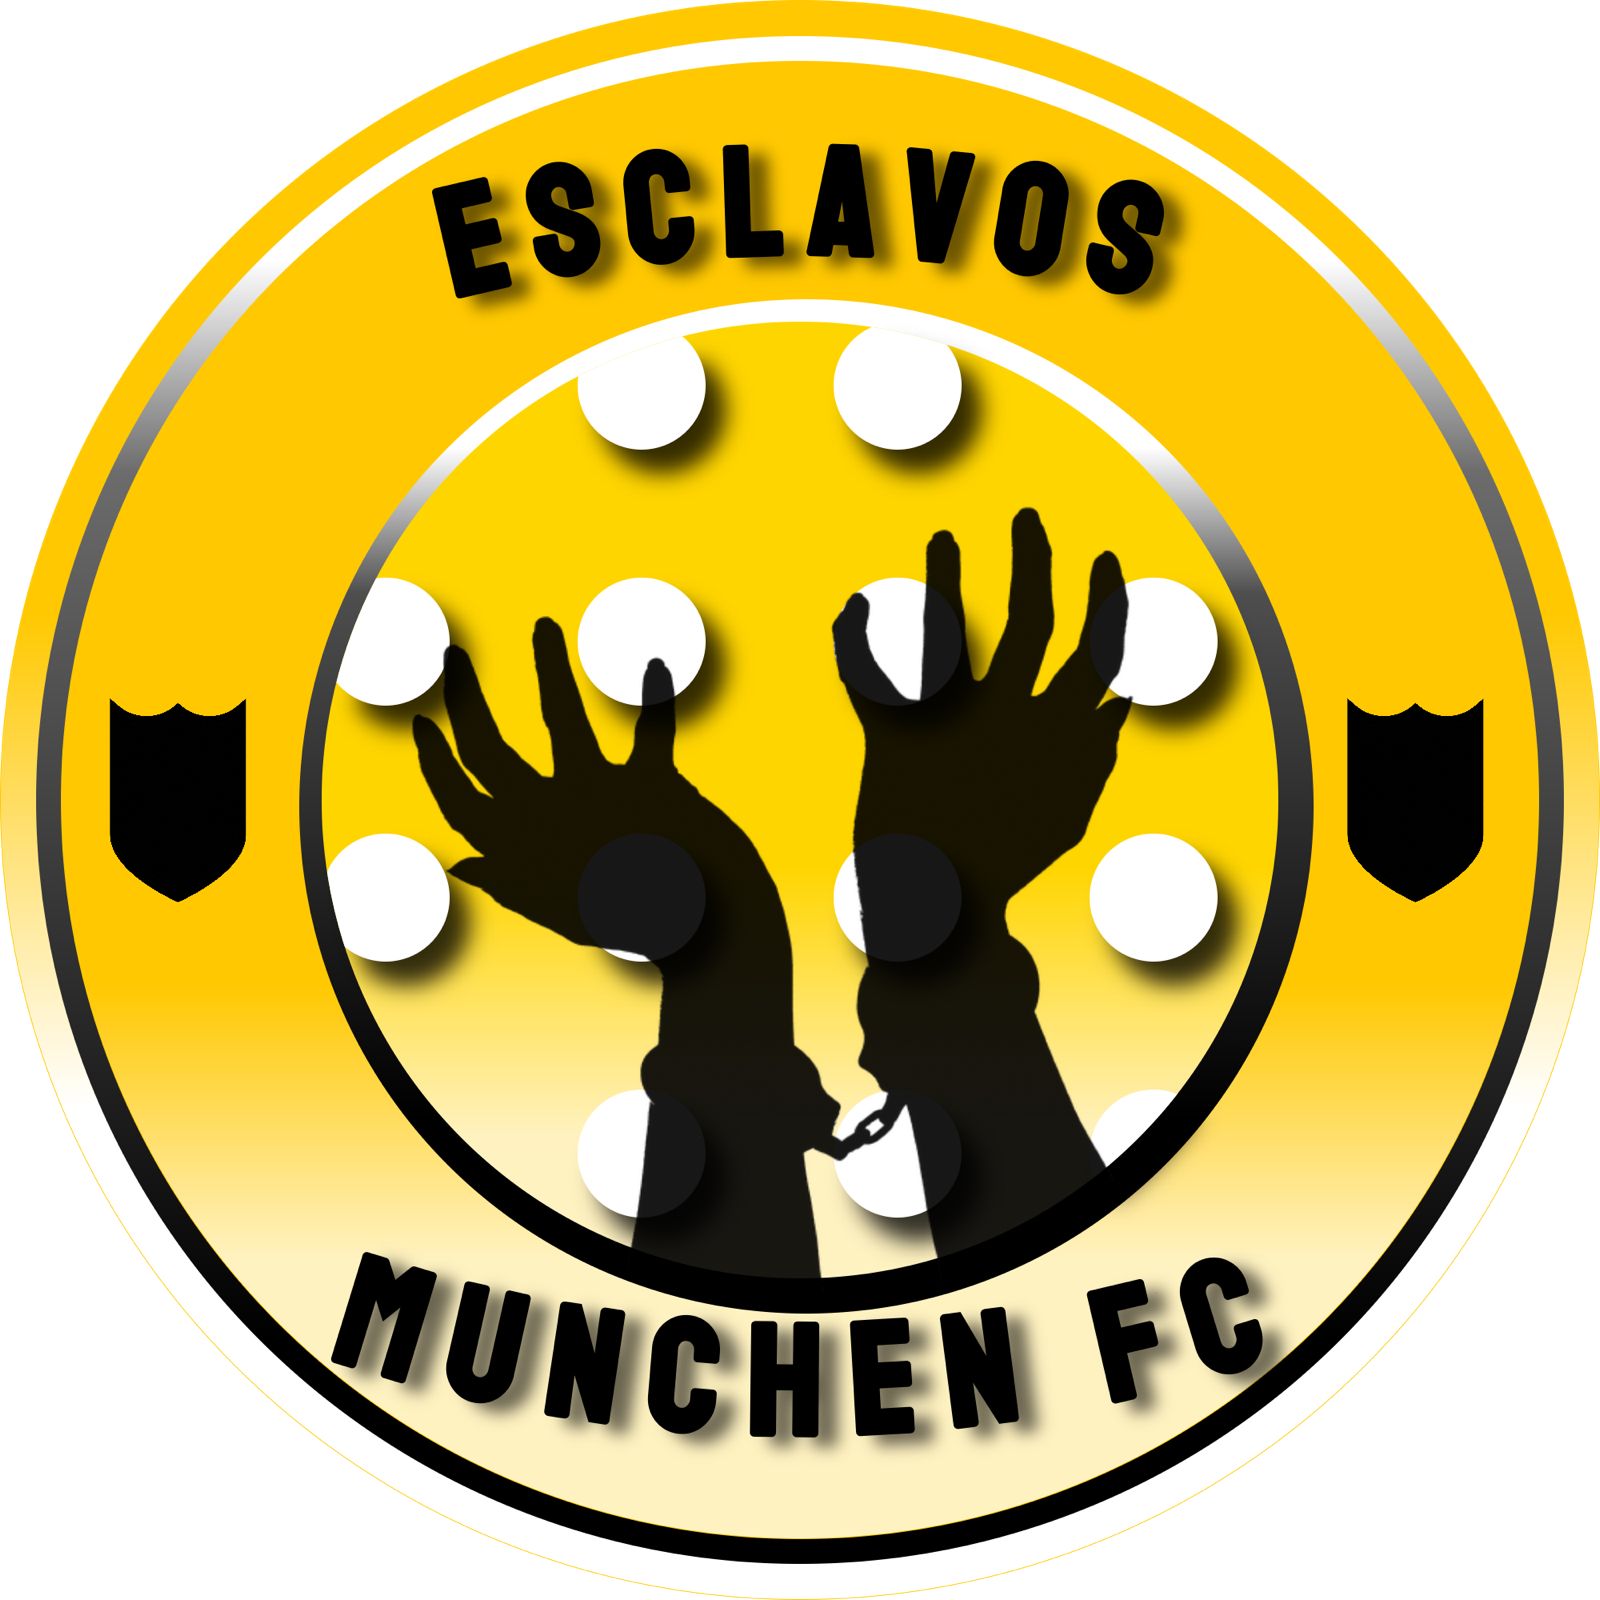 ESCLAVOS MUNCHEN FC